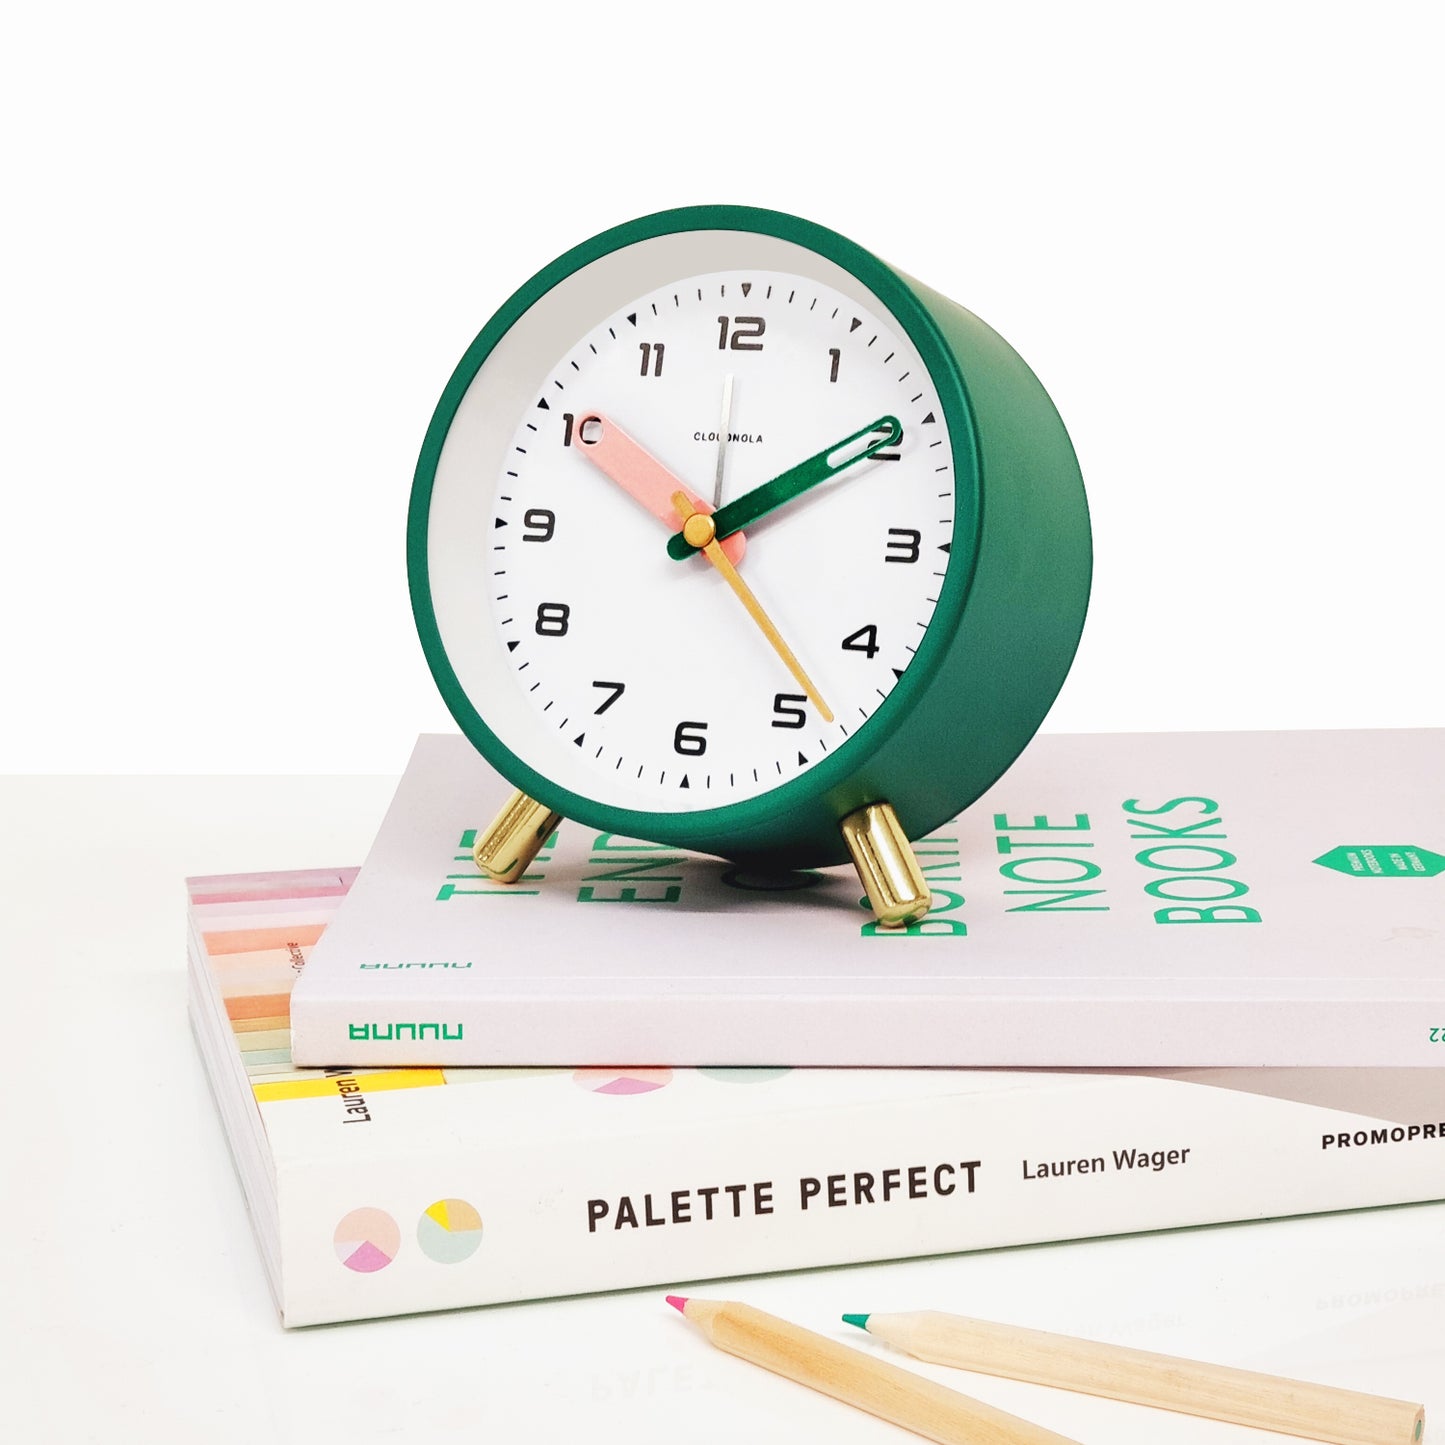 Studio Miami Green Alarm Clock - Vibrant Elegance - Golden-Legged Timepiece